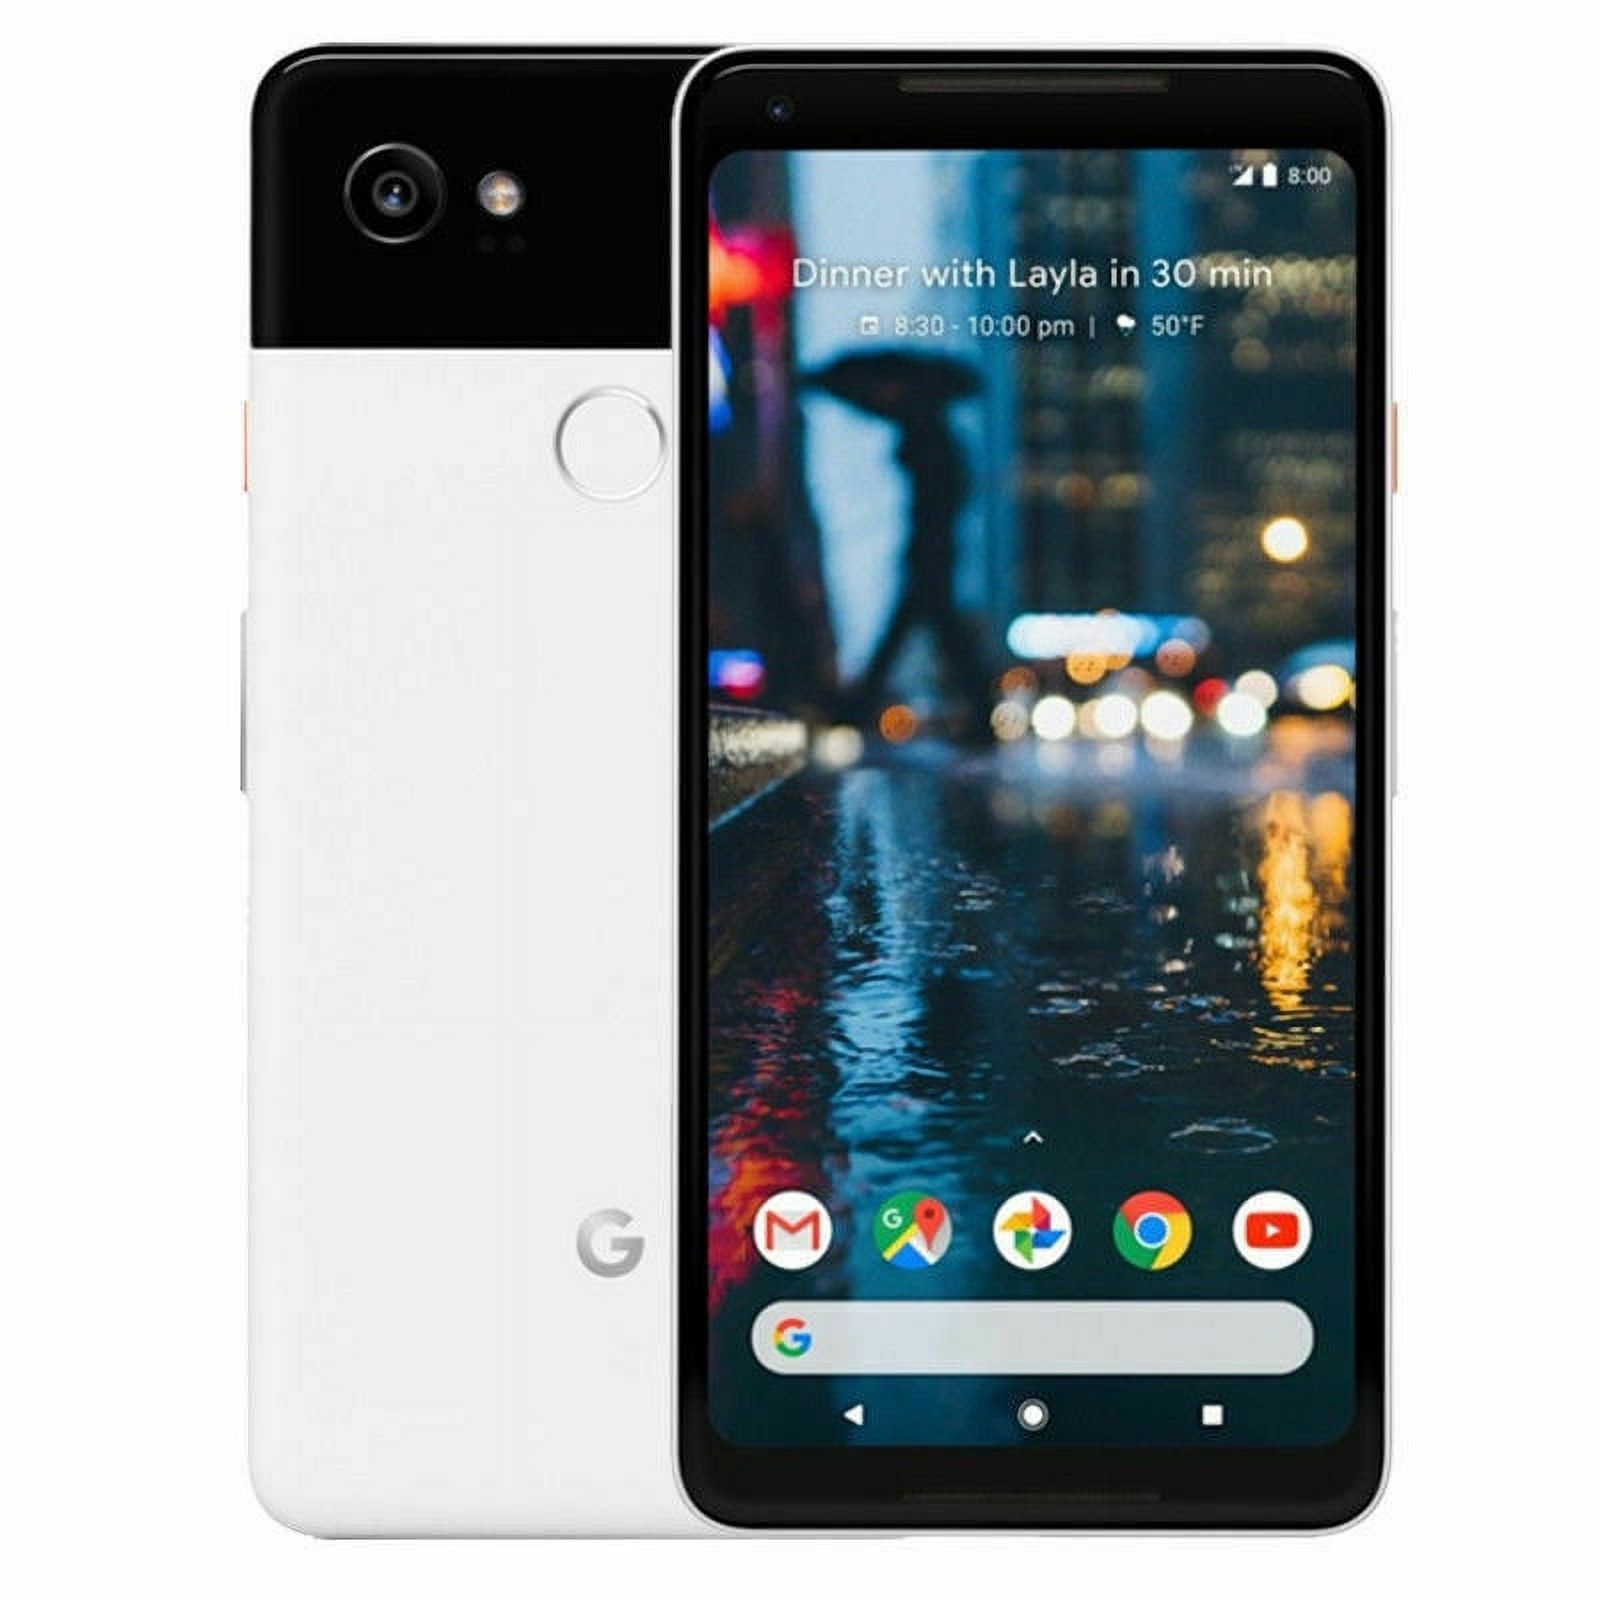 Google Pixel 2 XL Verizon - White & Black (128GB) - image 3 of 3